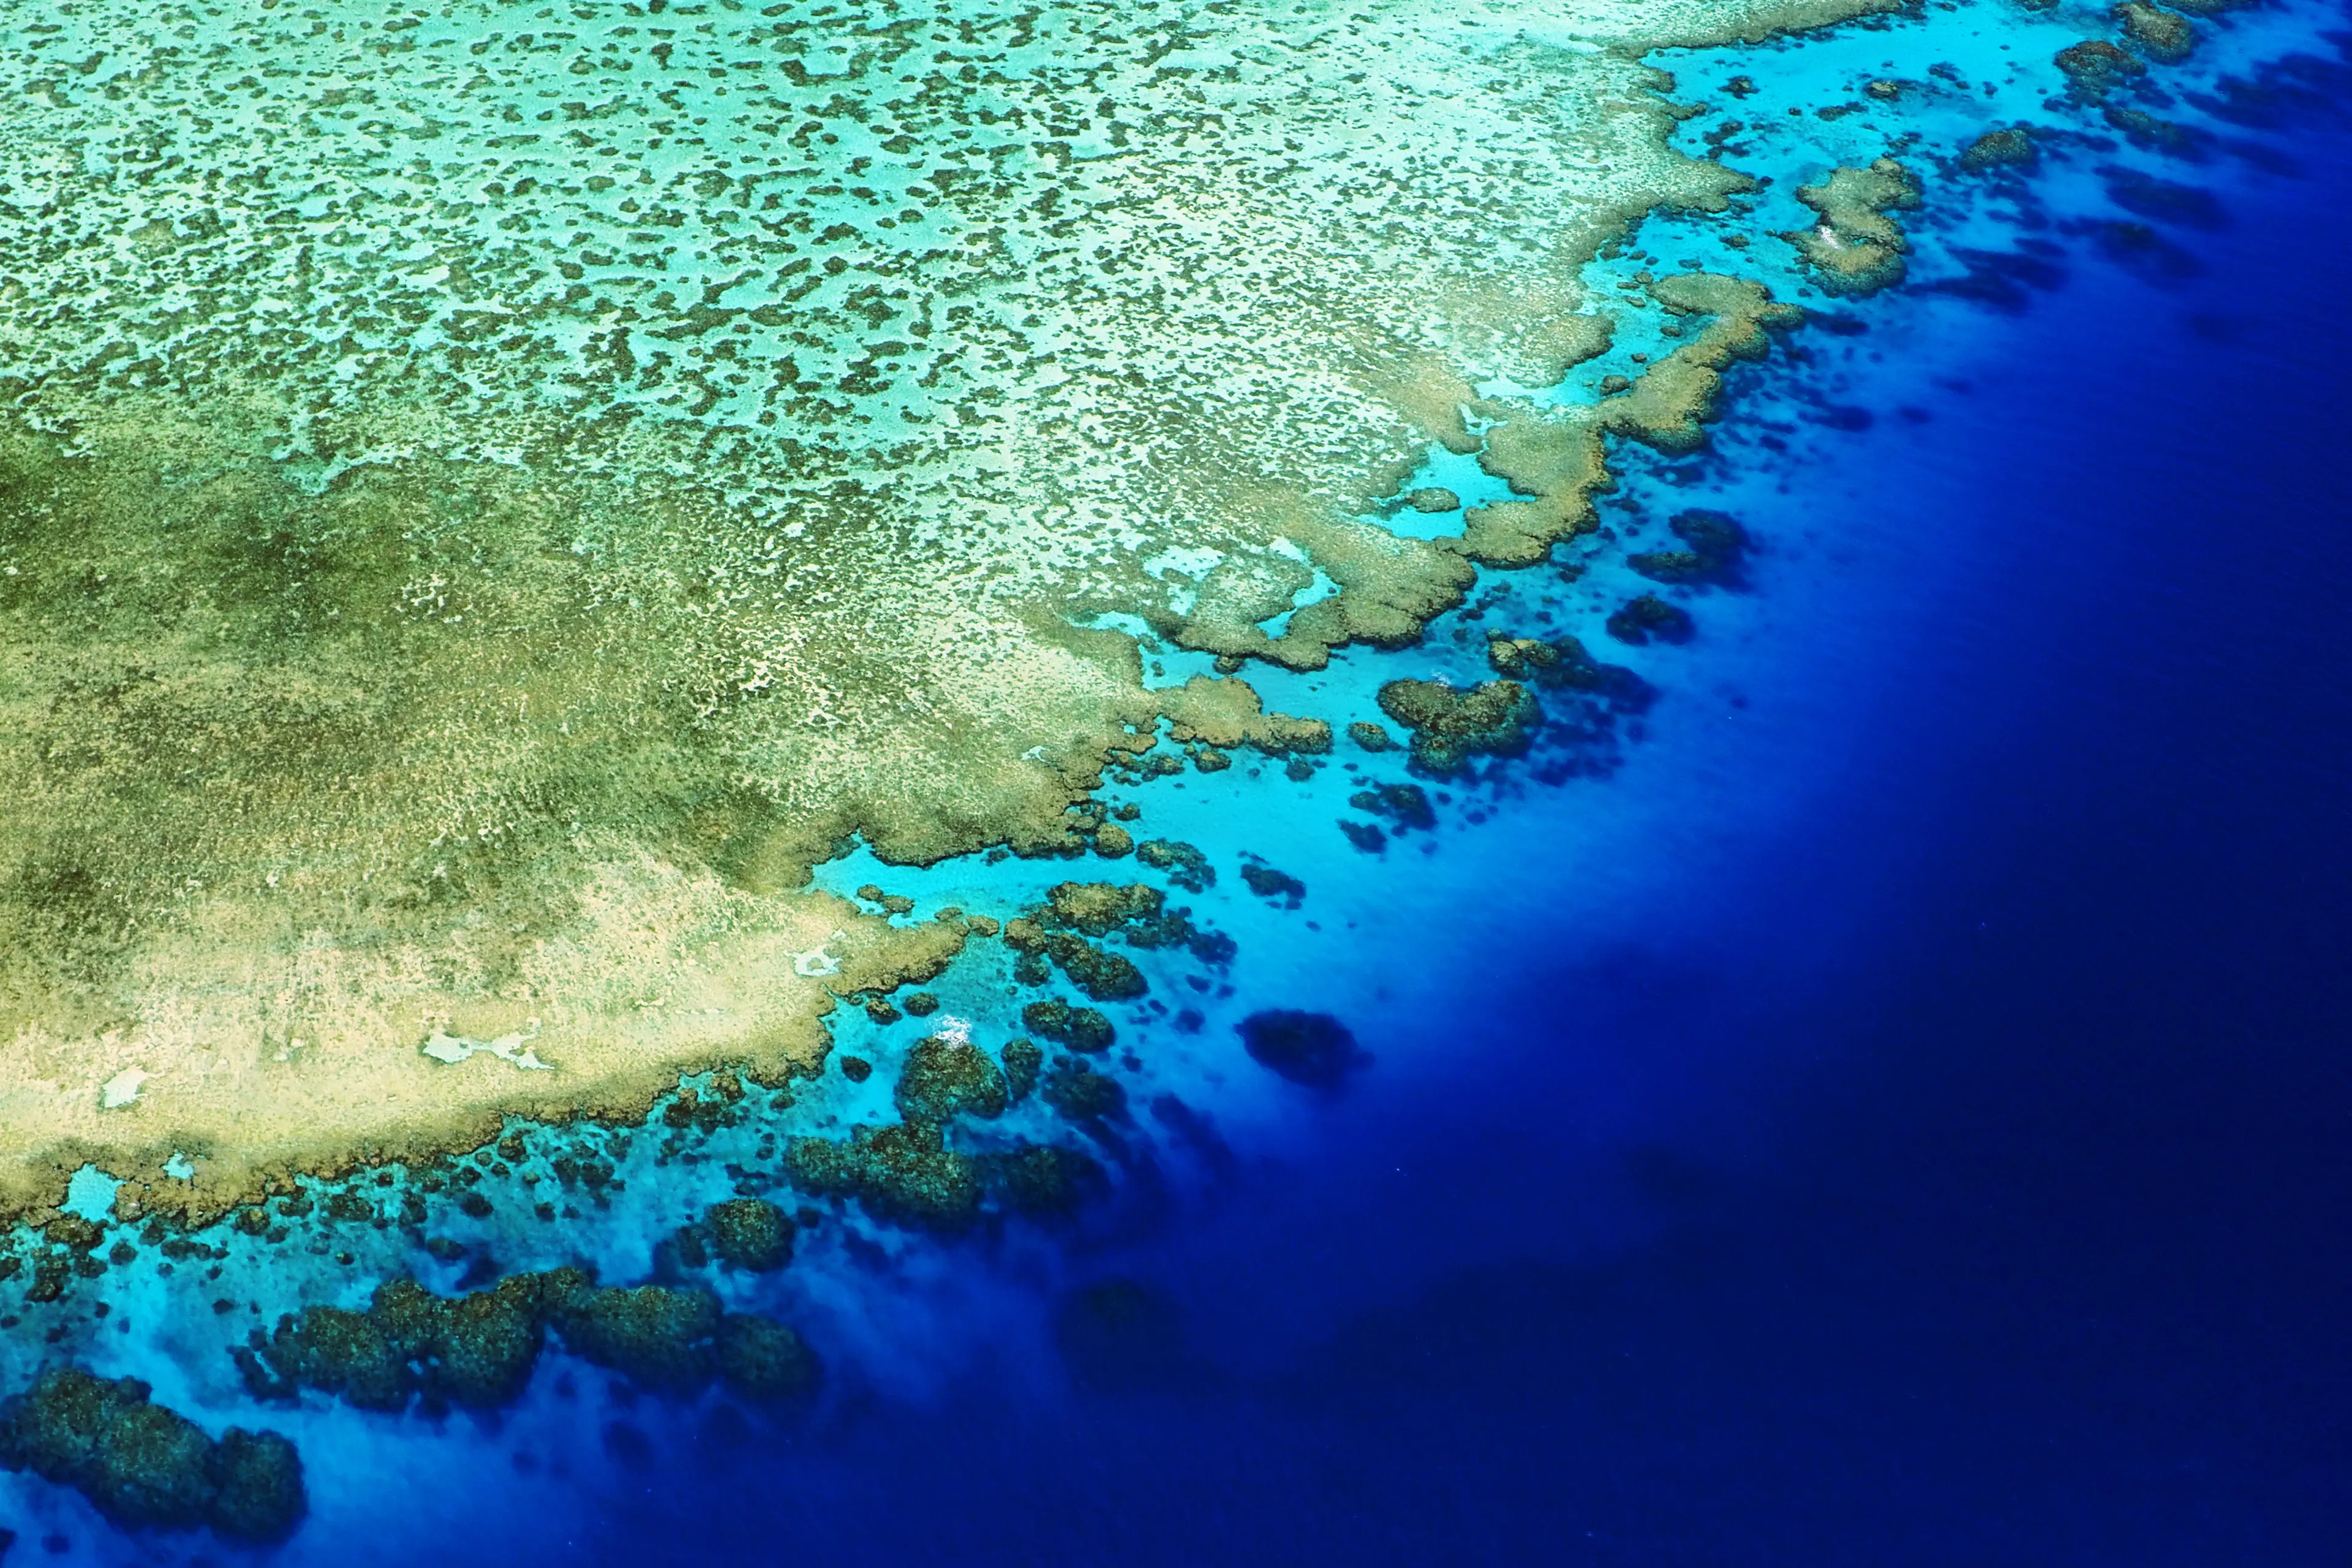 Lodestone Reef crest meets the ocean